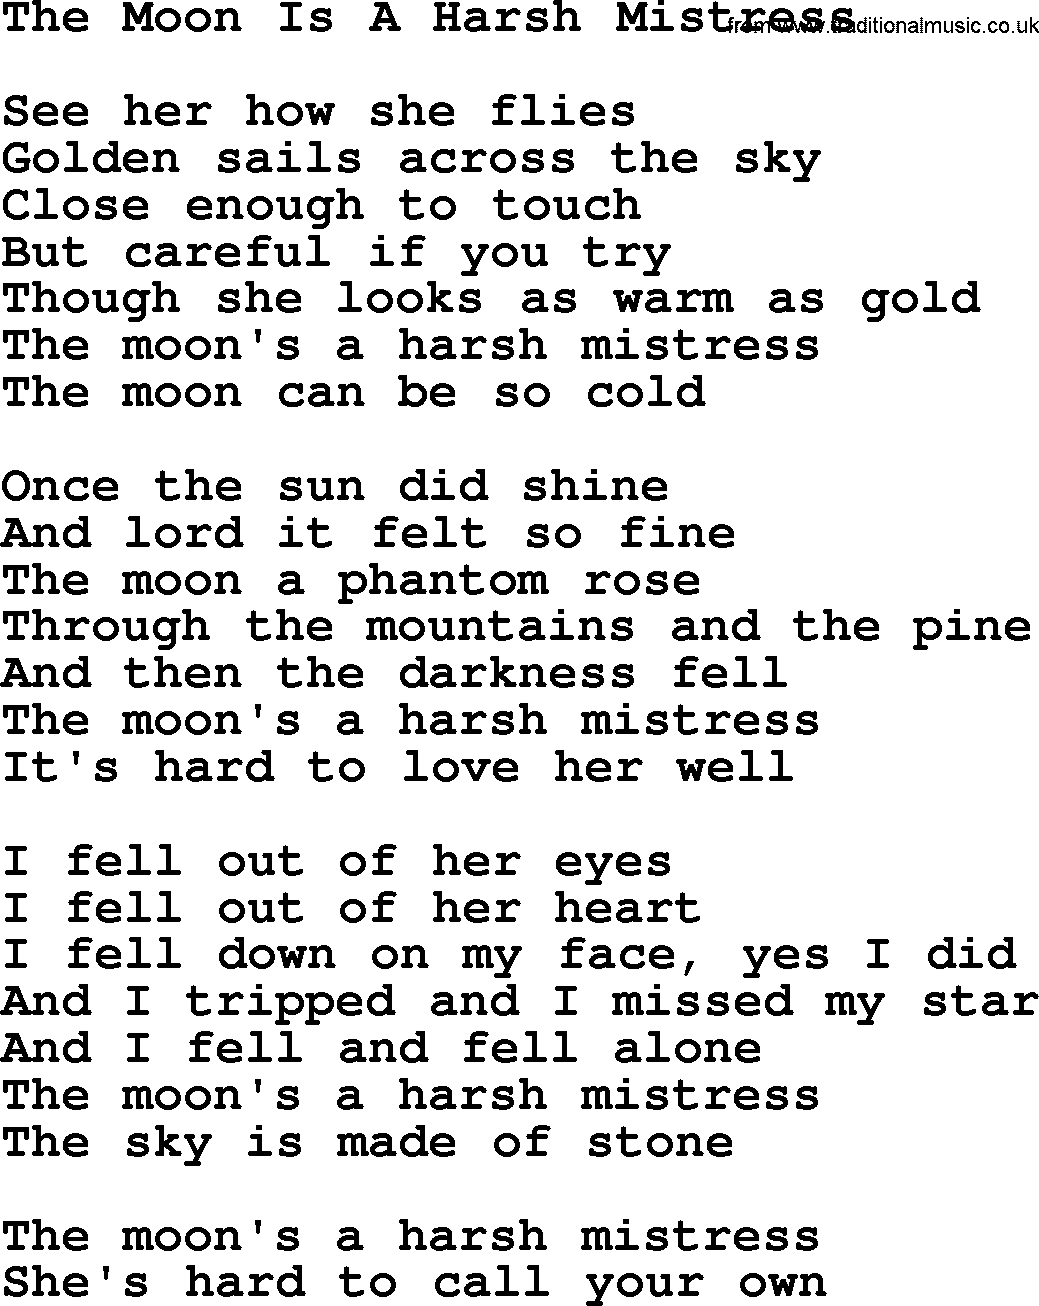 Joan Baez song The Moon Is A Harsh Mistress, lyrics